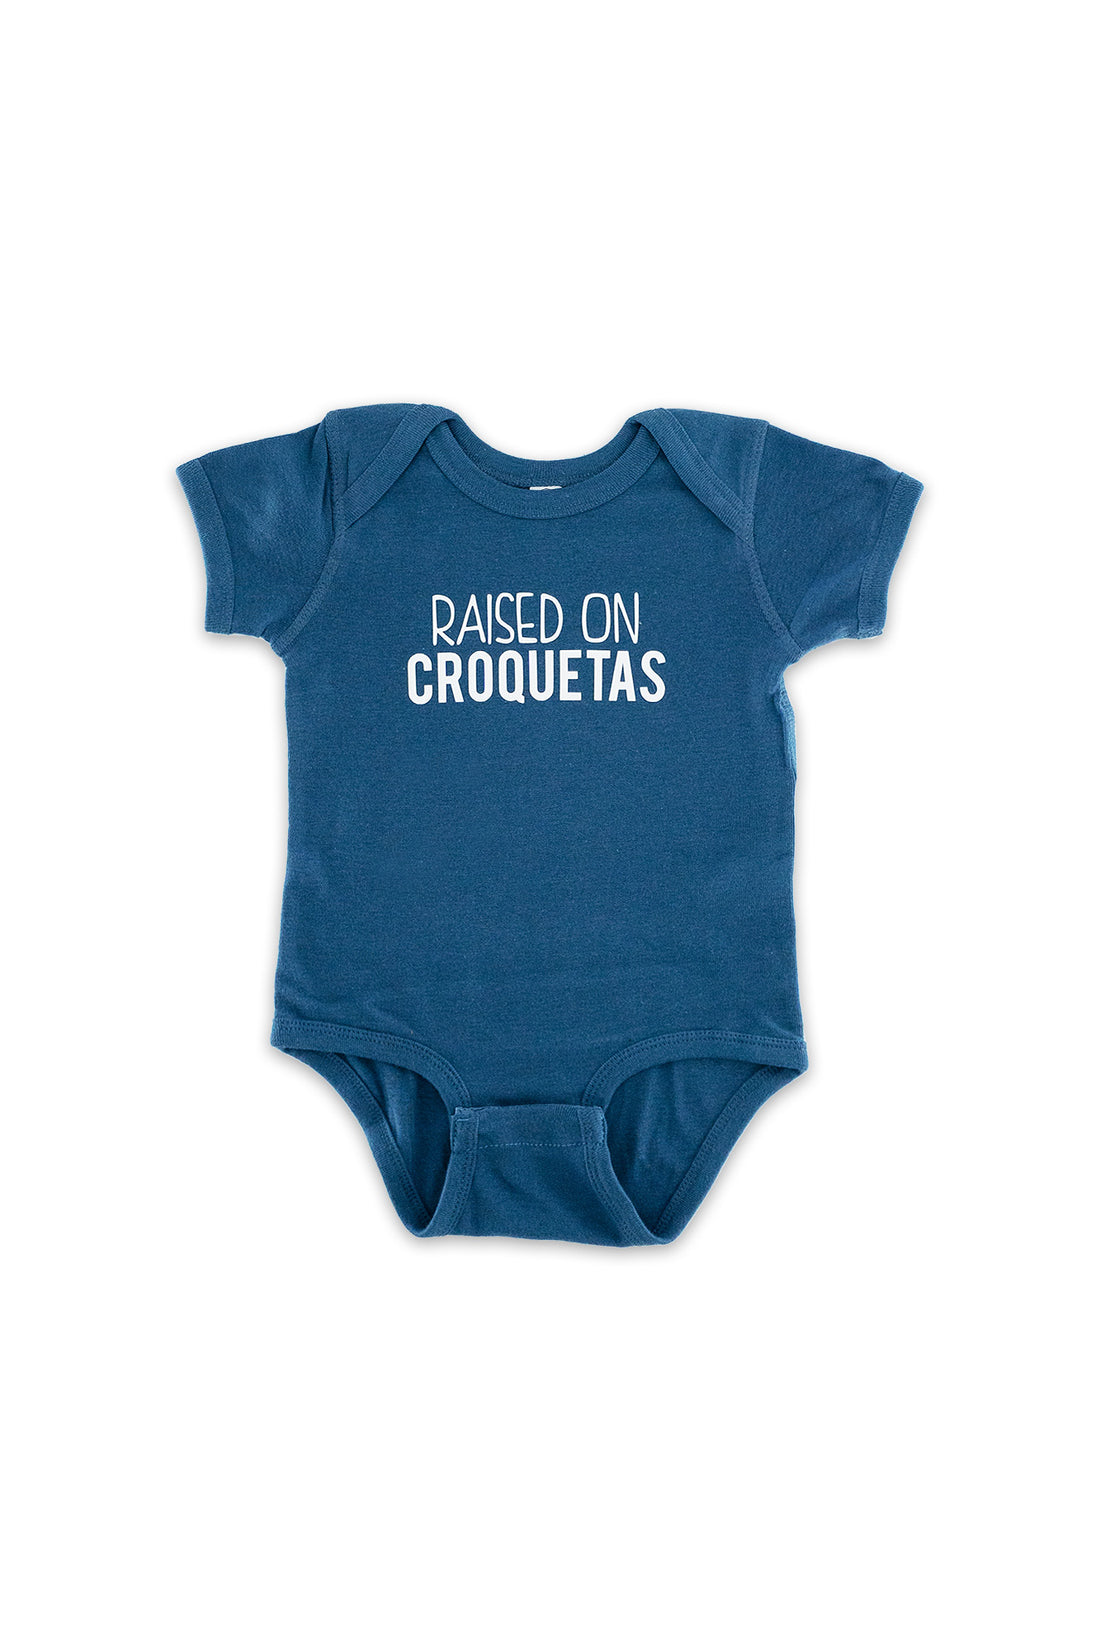 Raised on Croquetas Onesie - Babies